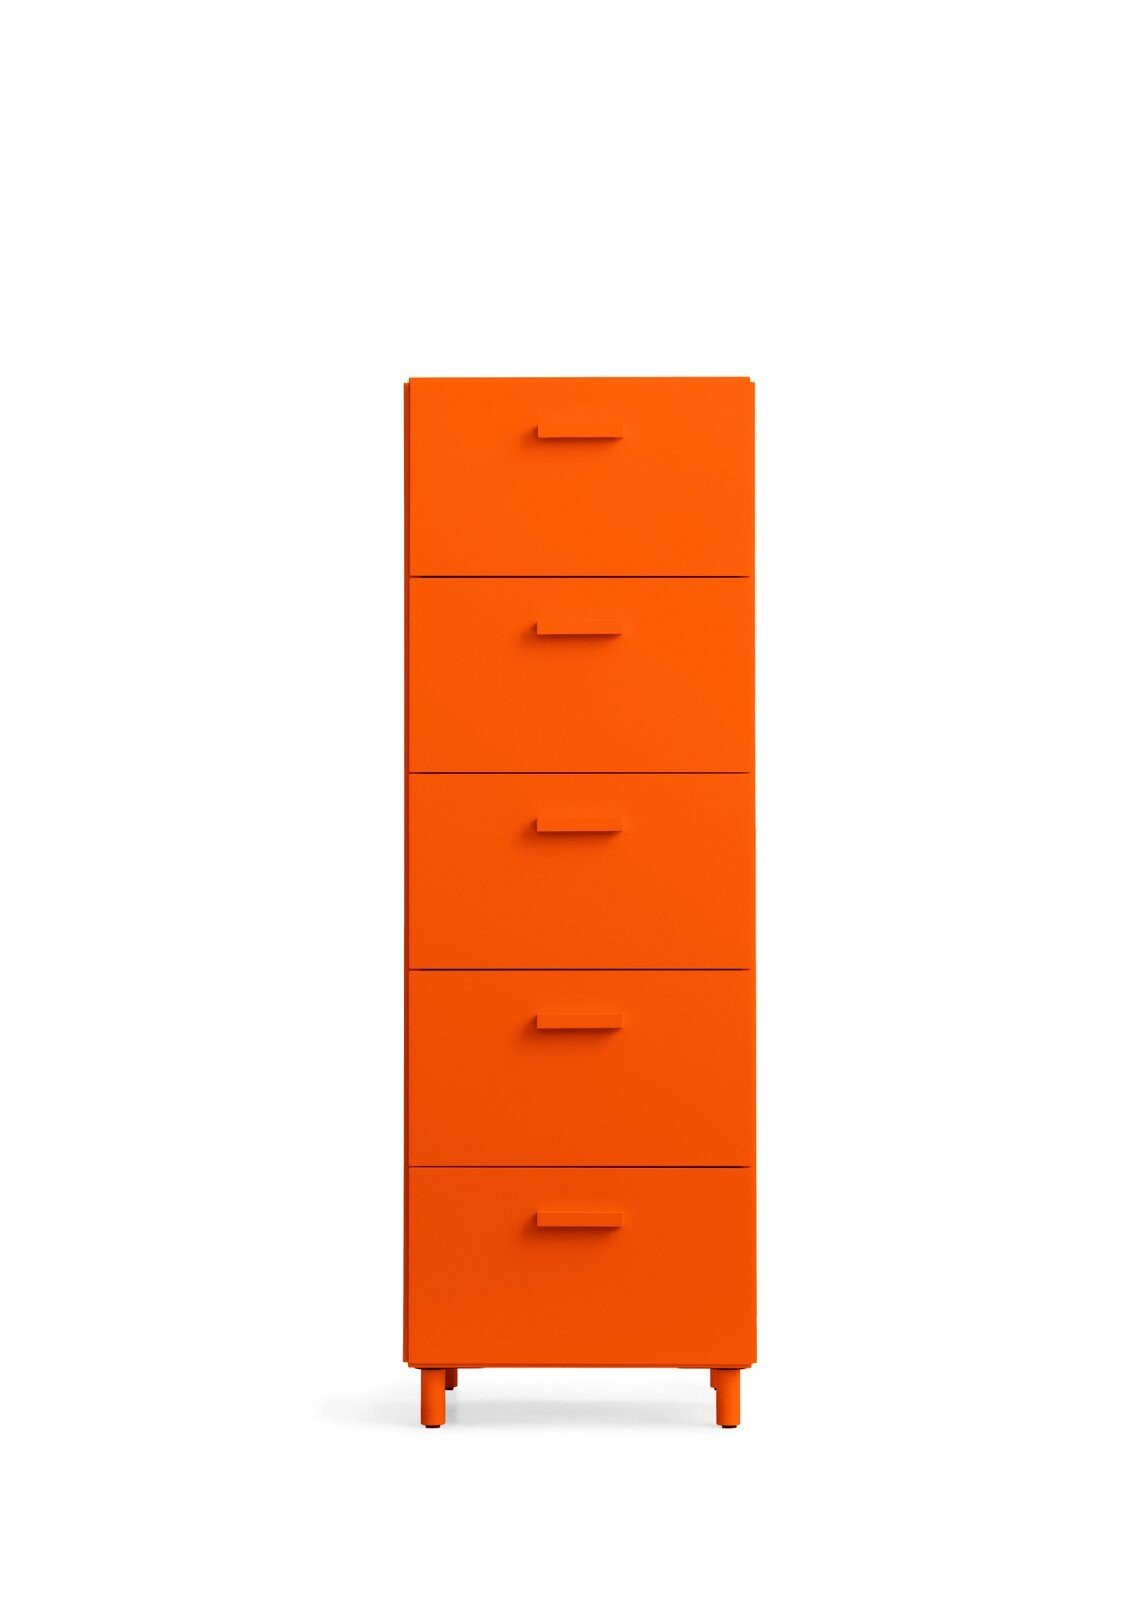 media-hog-orange-1142x1600